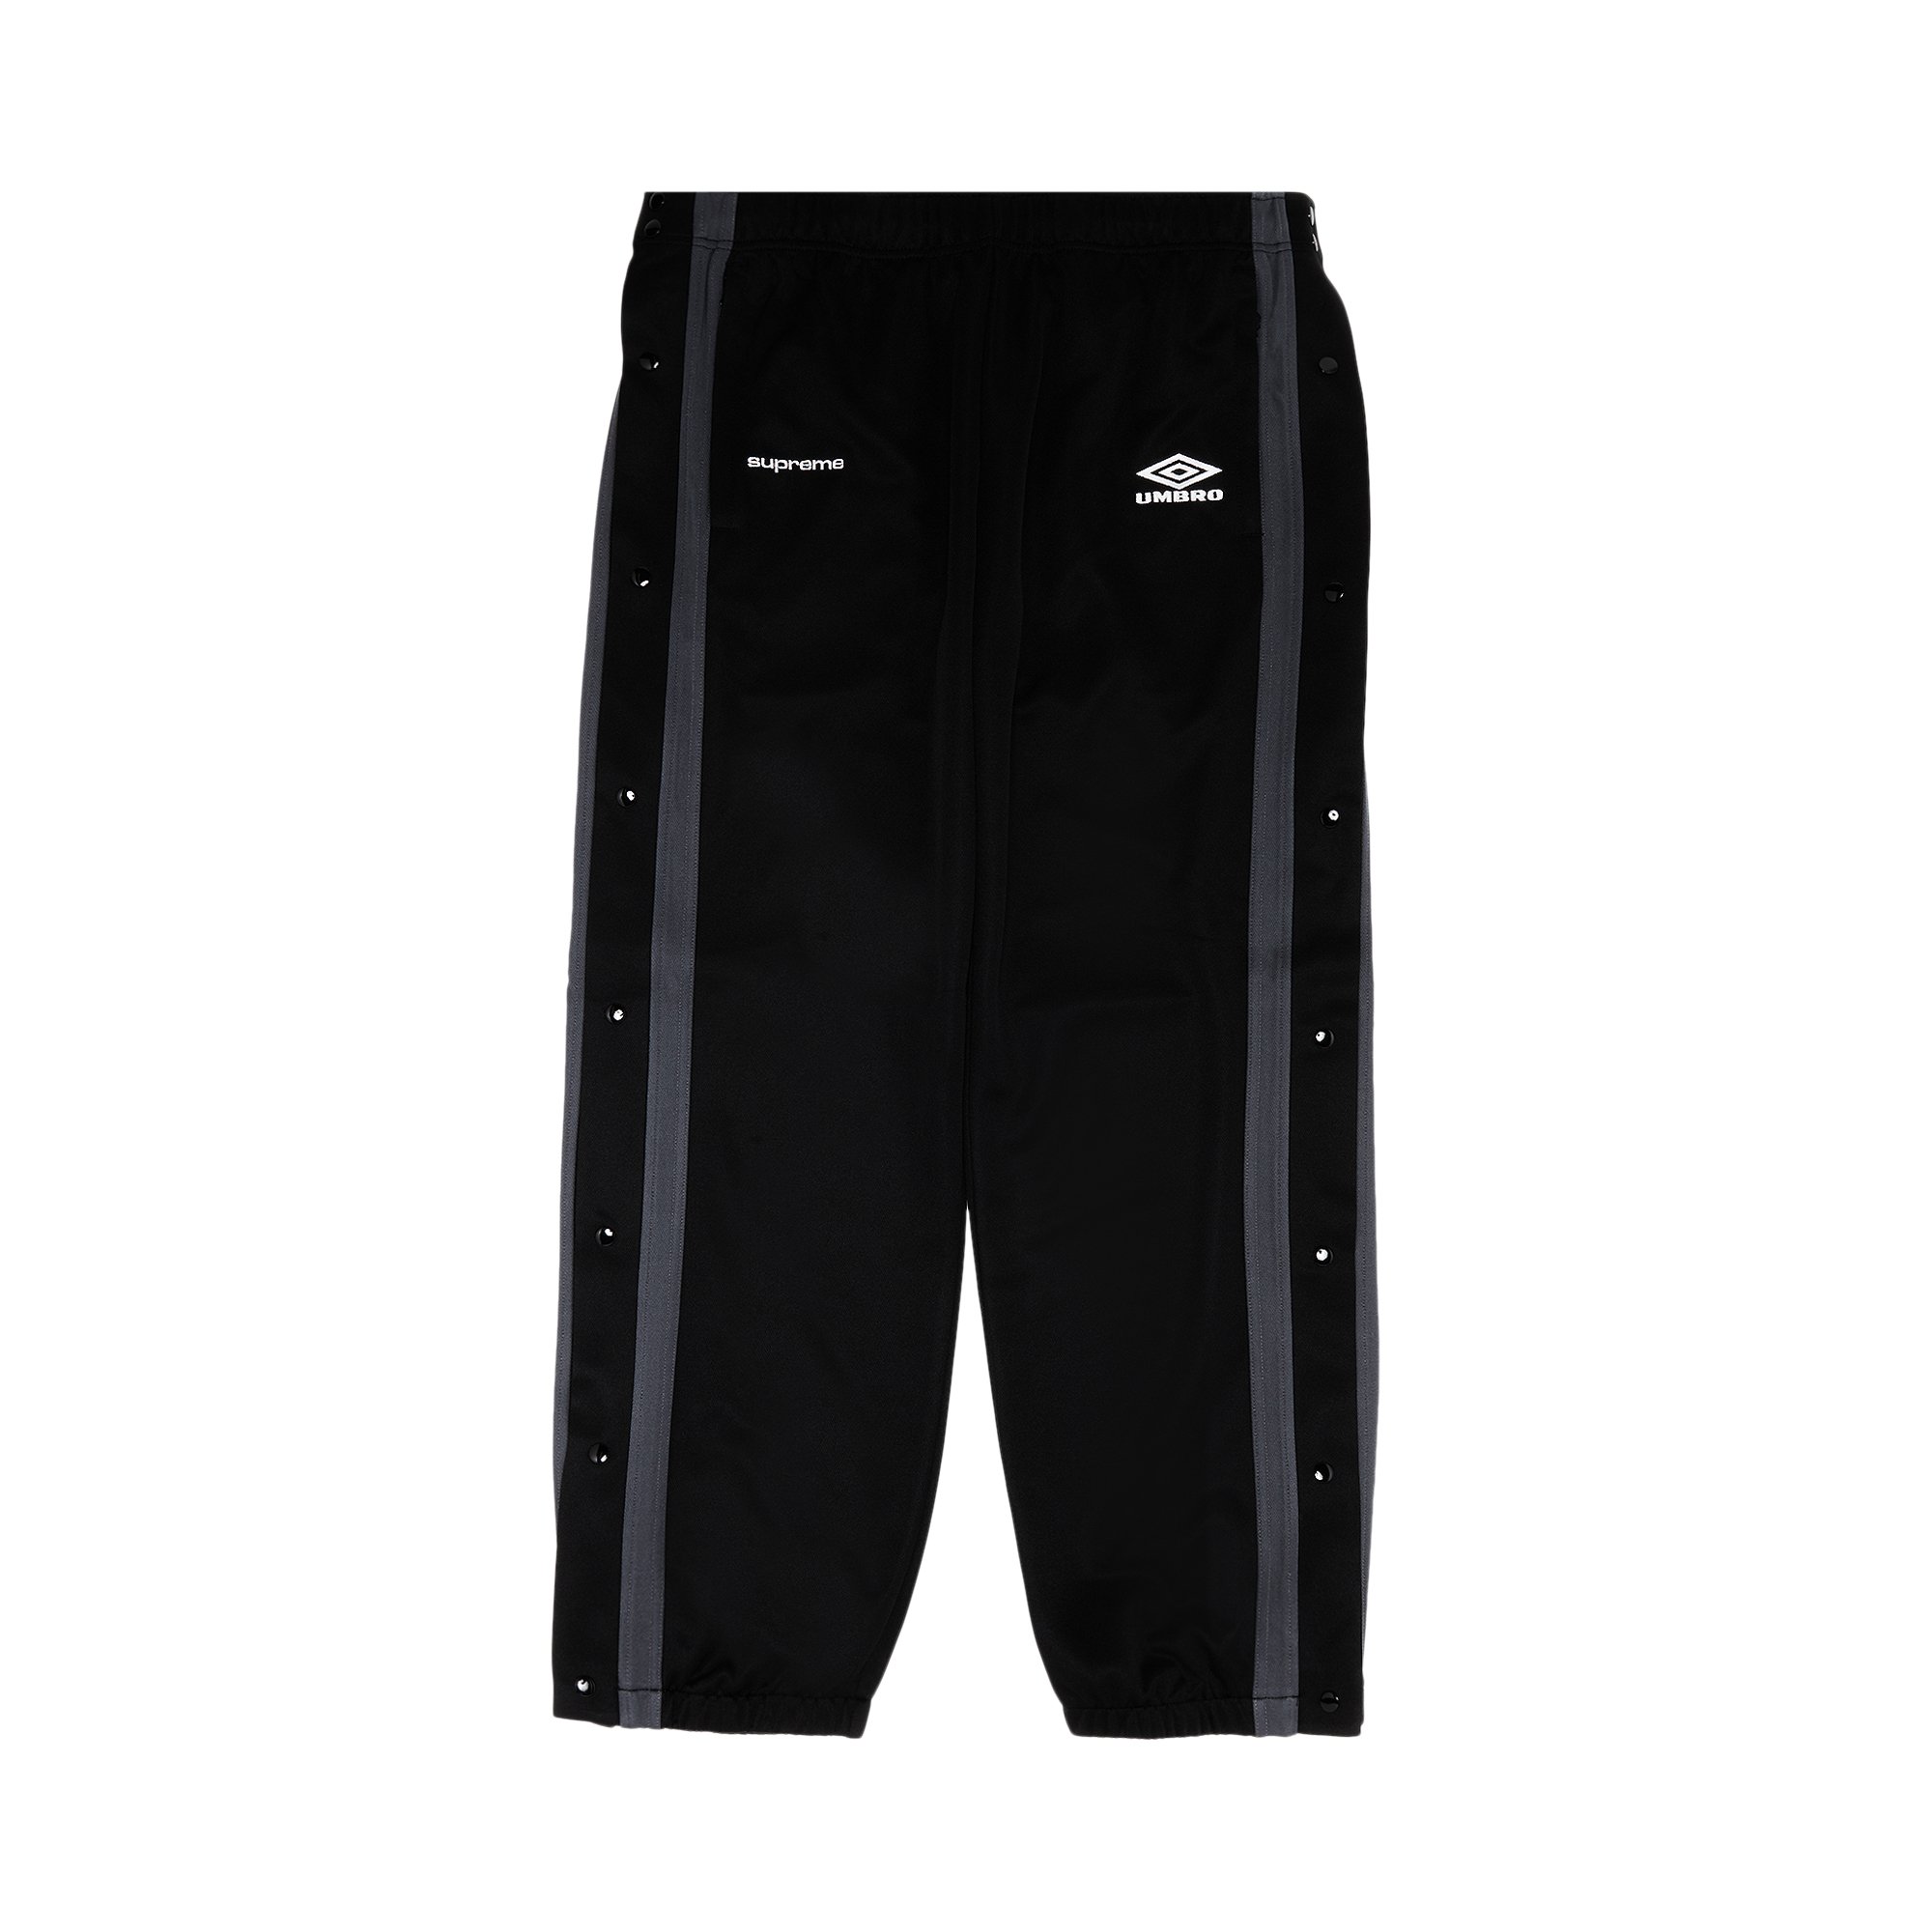 SizeXLSupreme umbro cotton track pant “black”